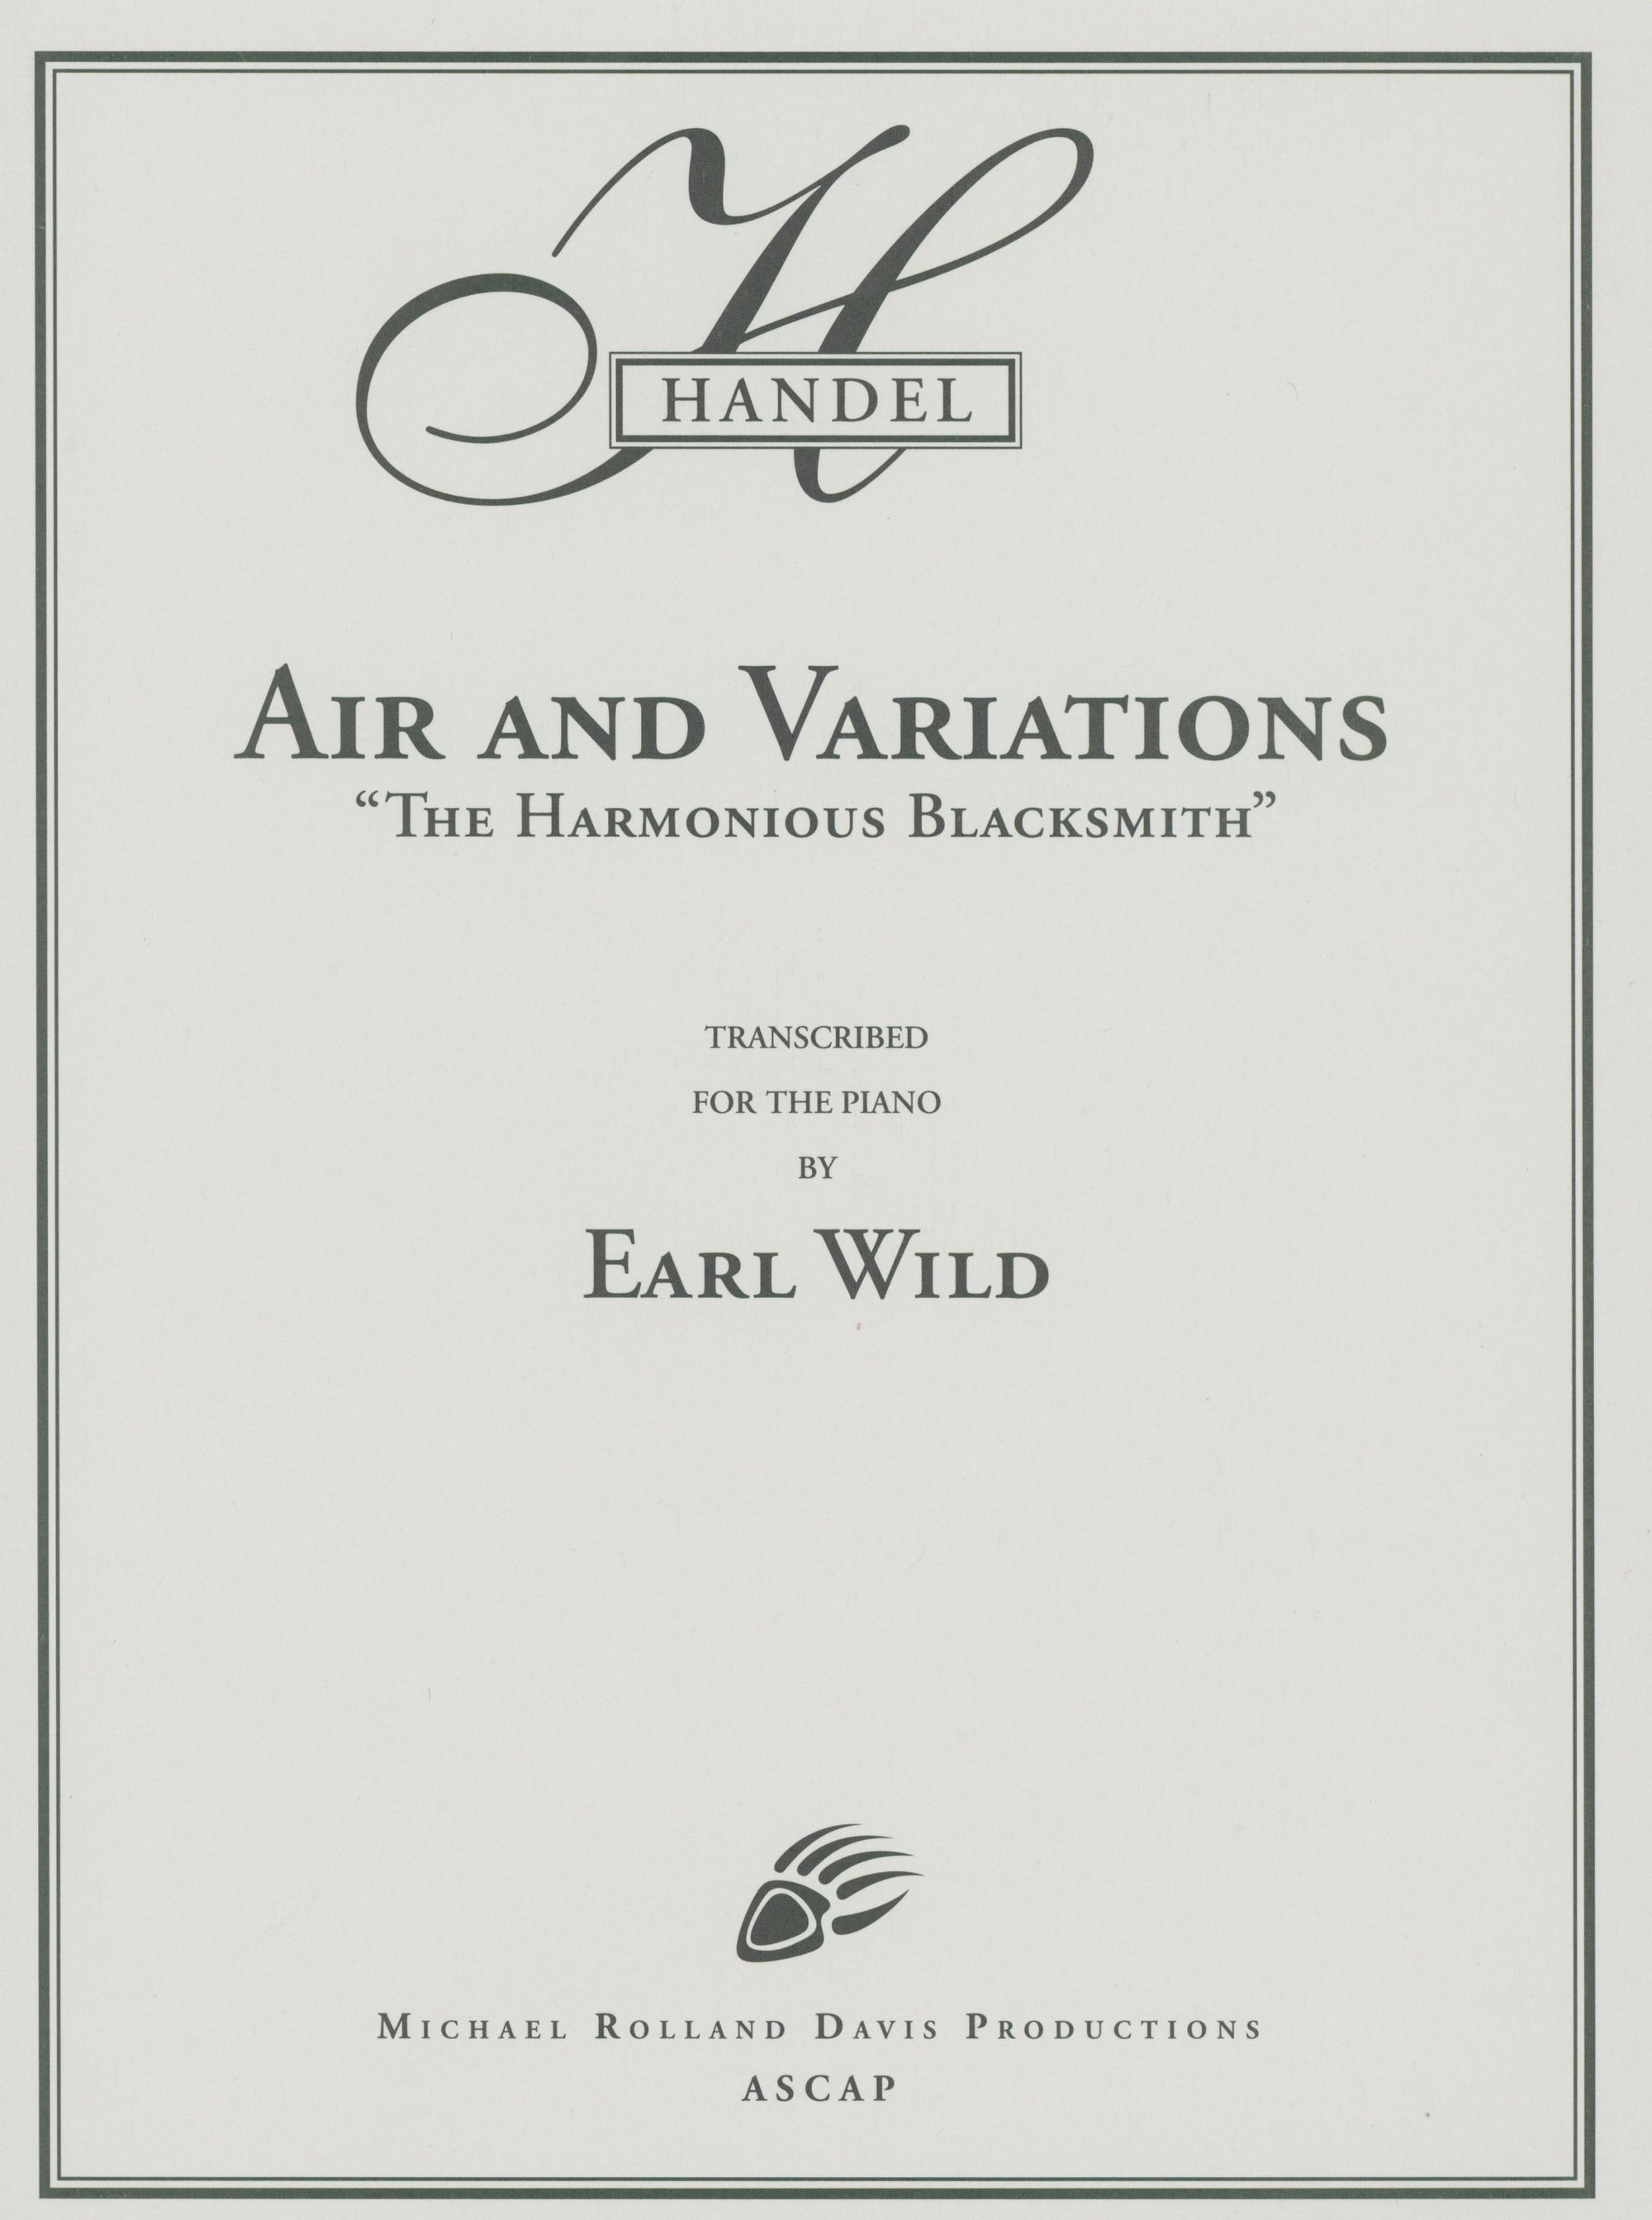 Handel-Wild: Air and Variations